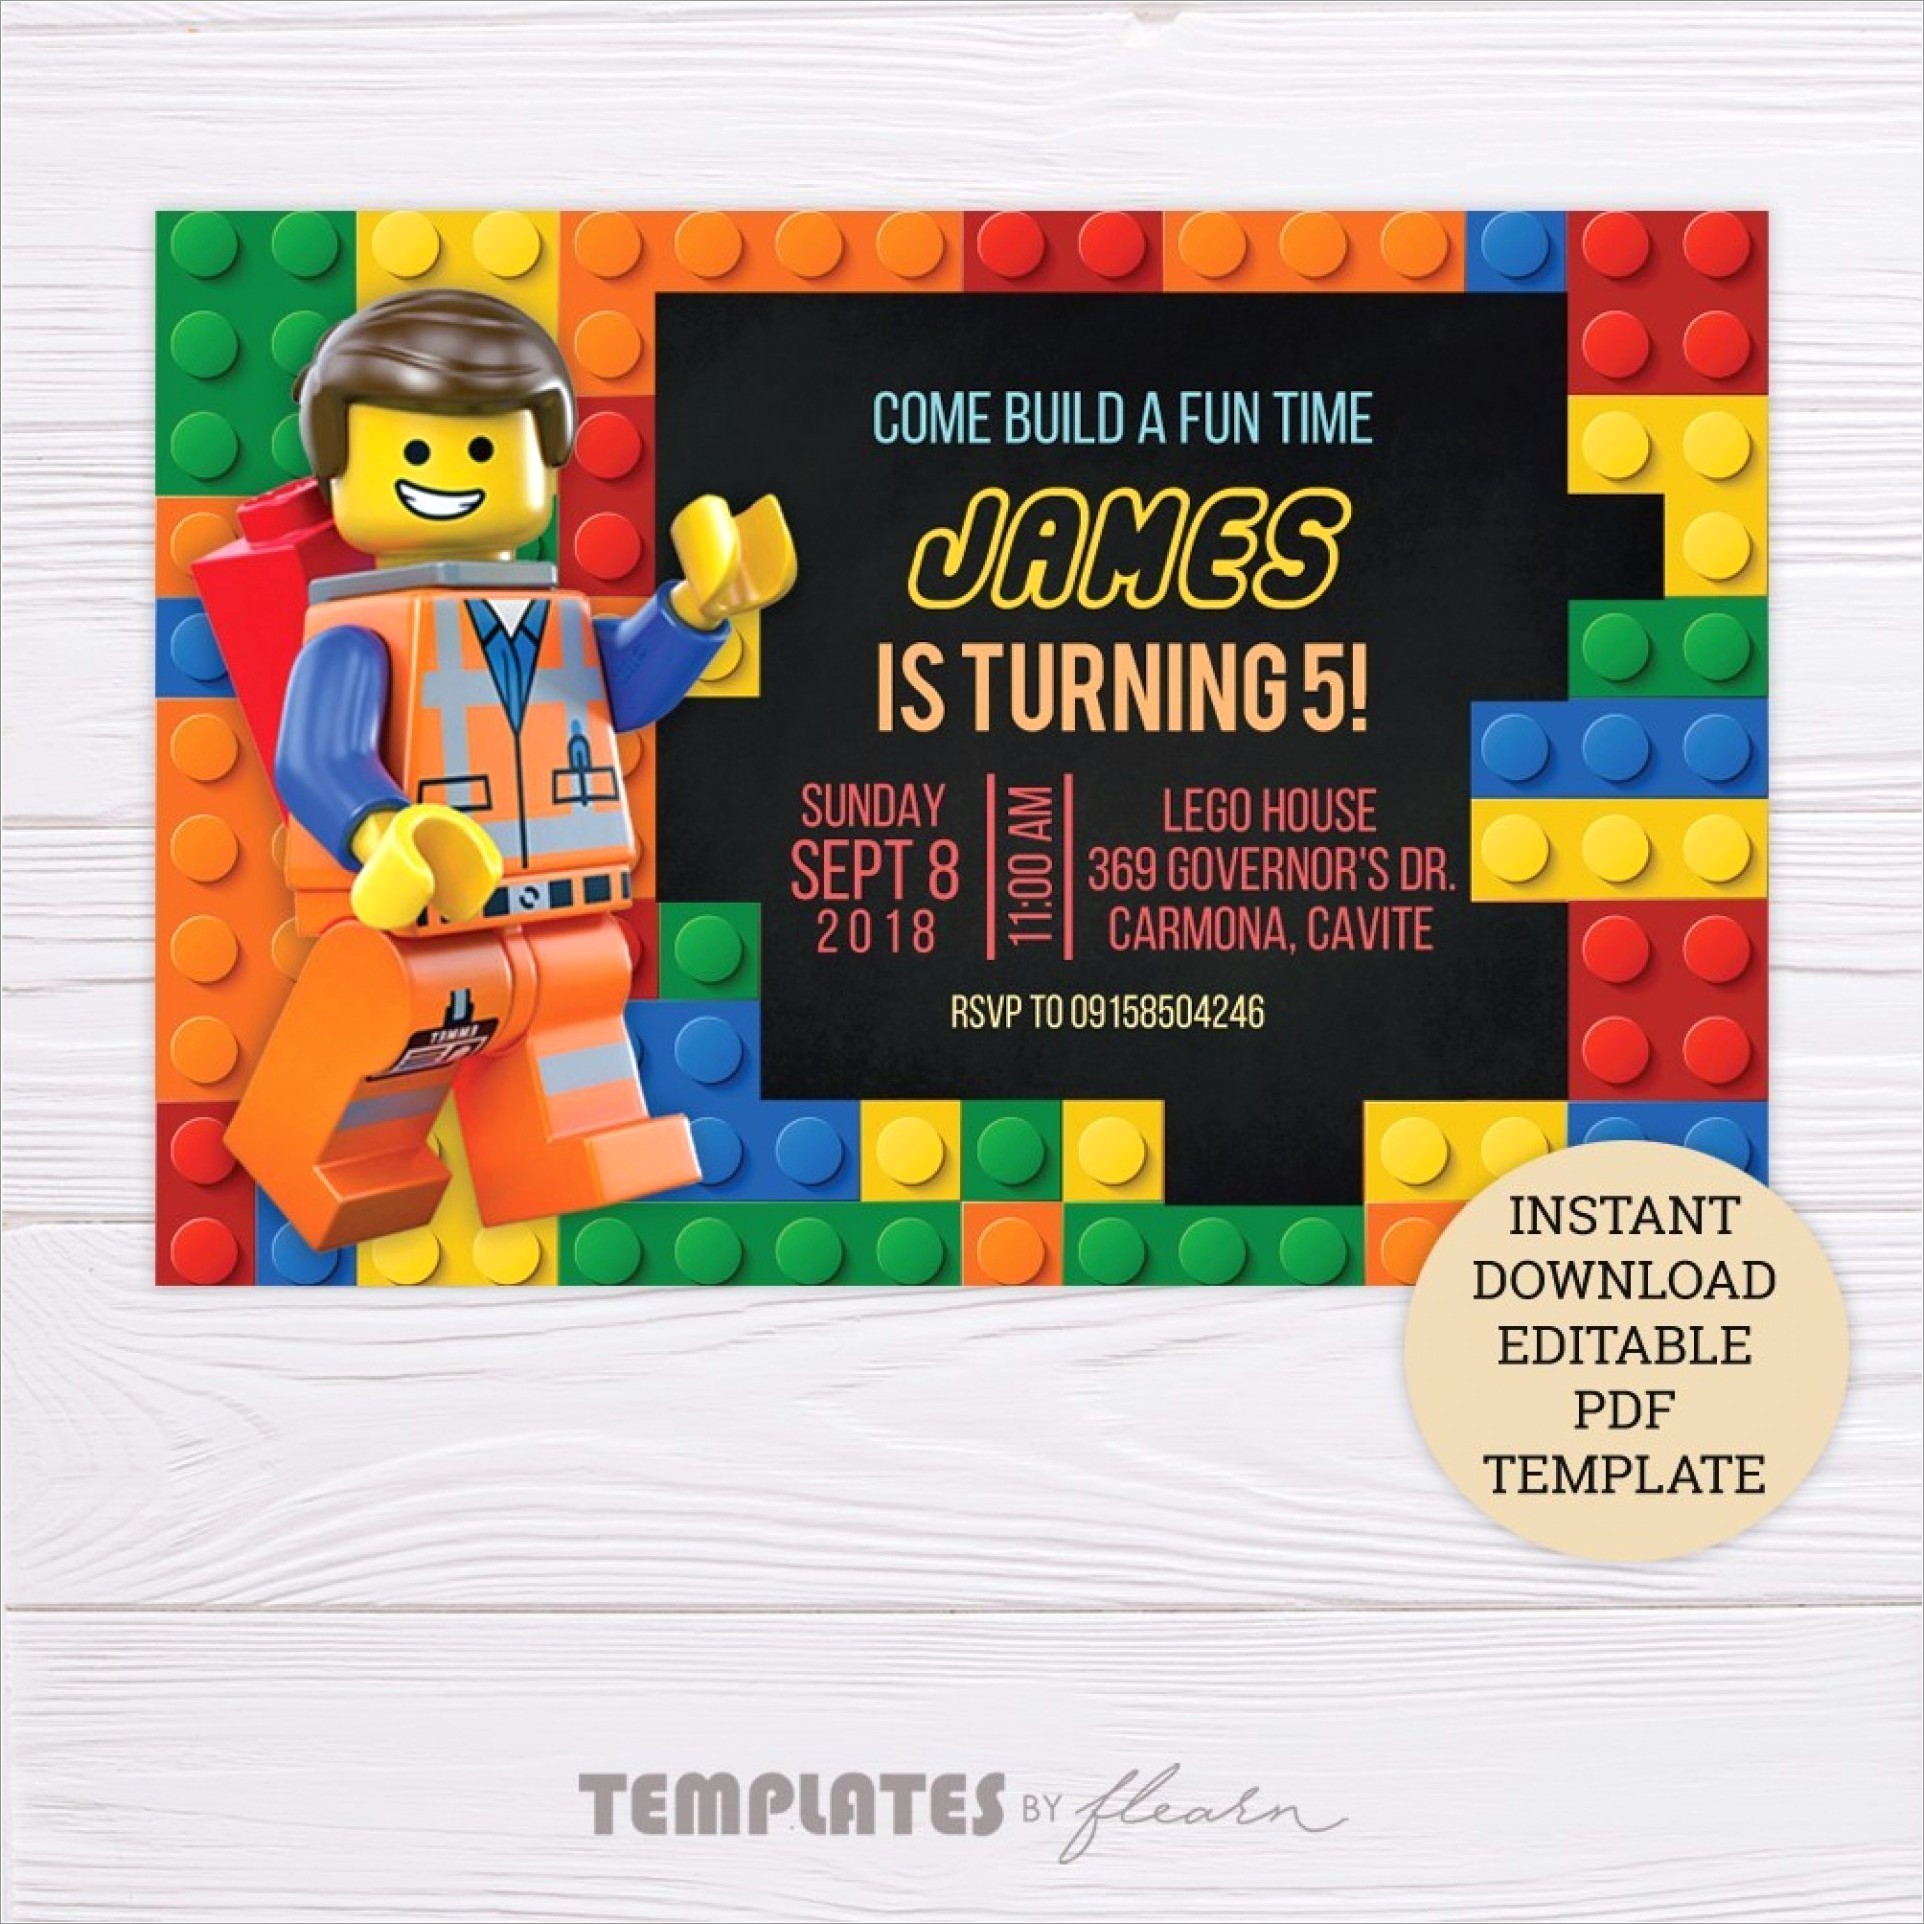 Editable Free Lego Invitations